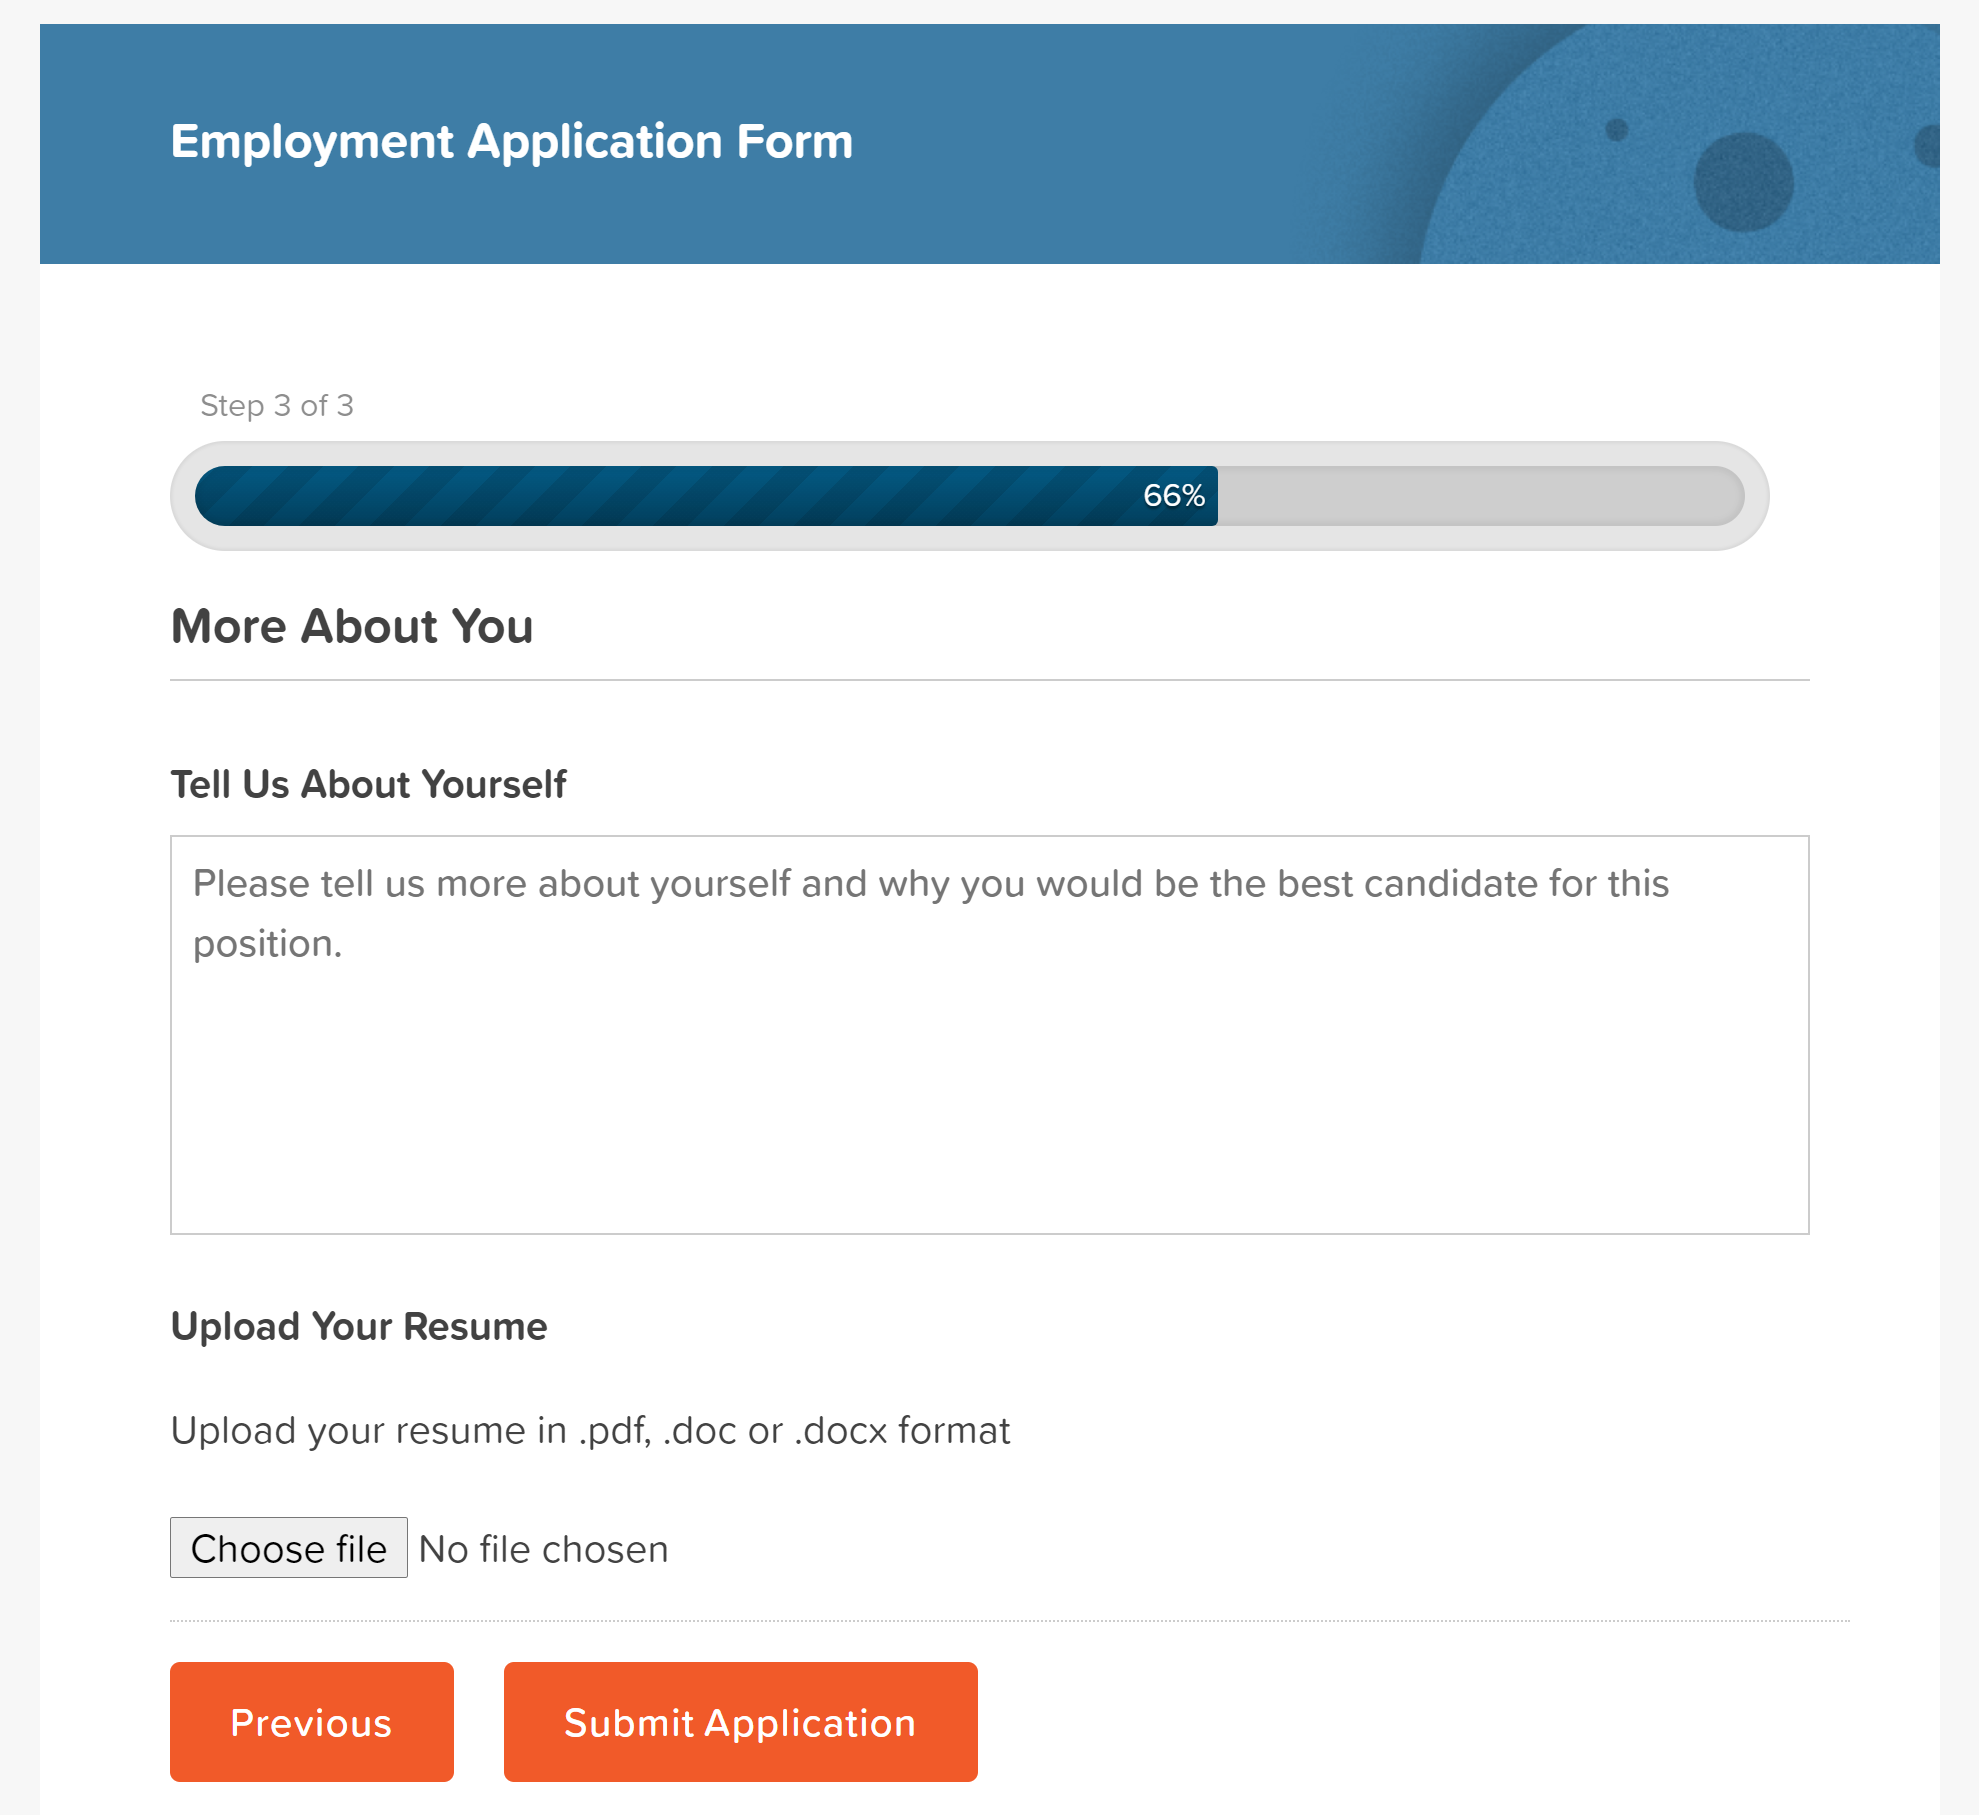 Employment Application Form File Upload